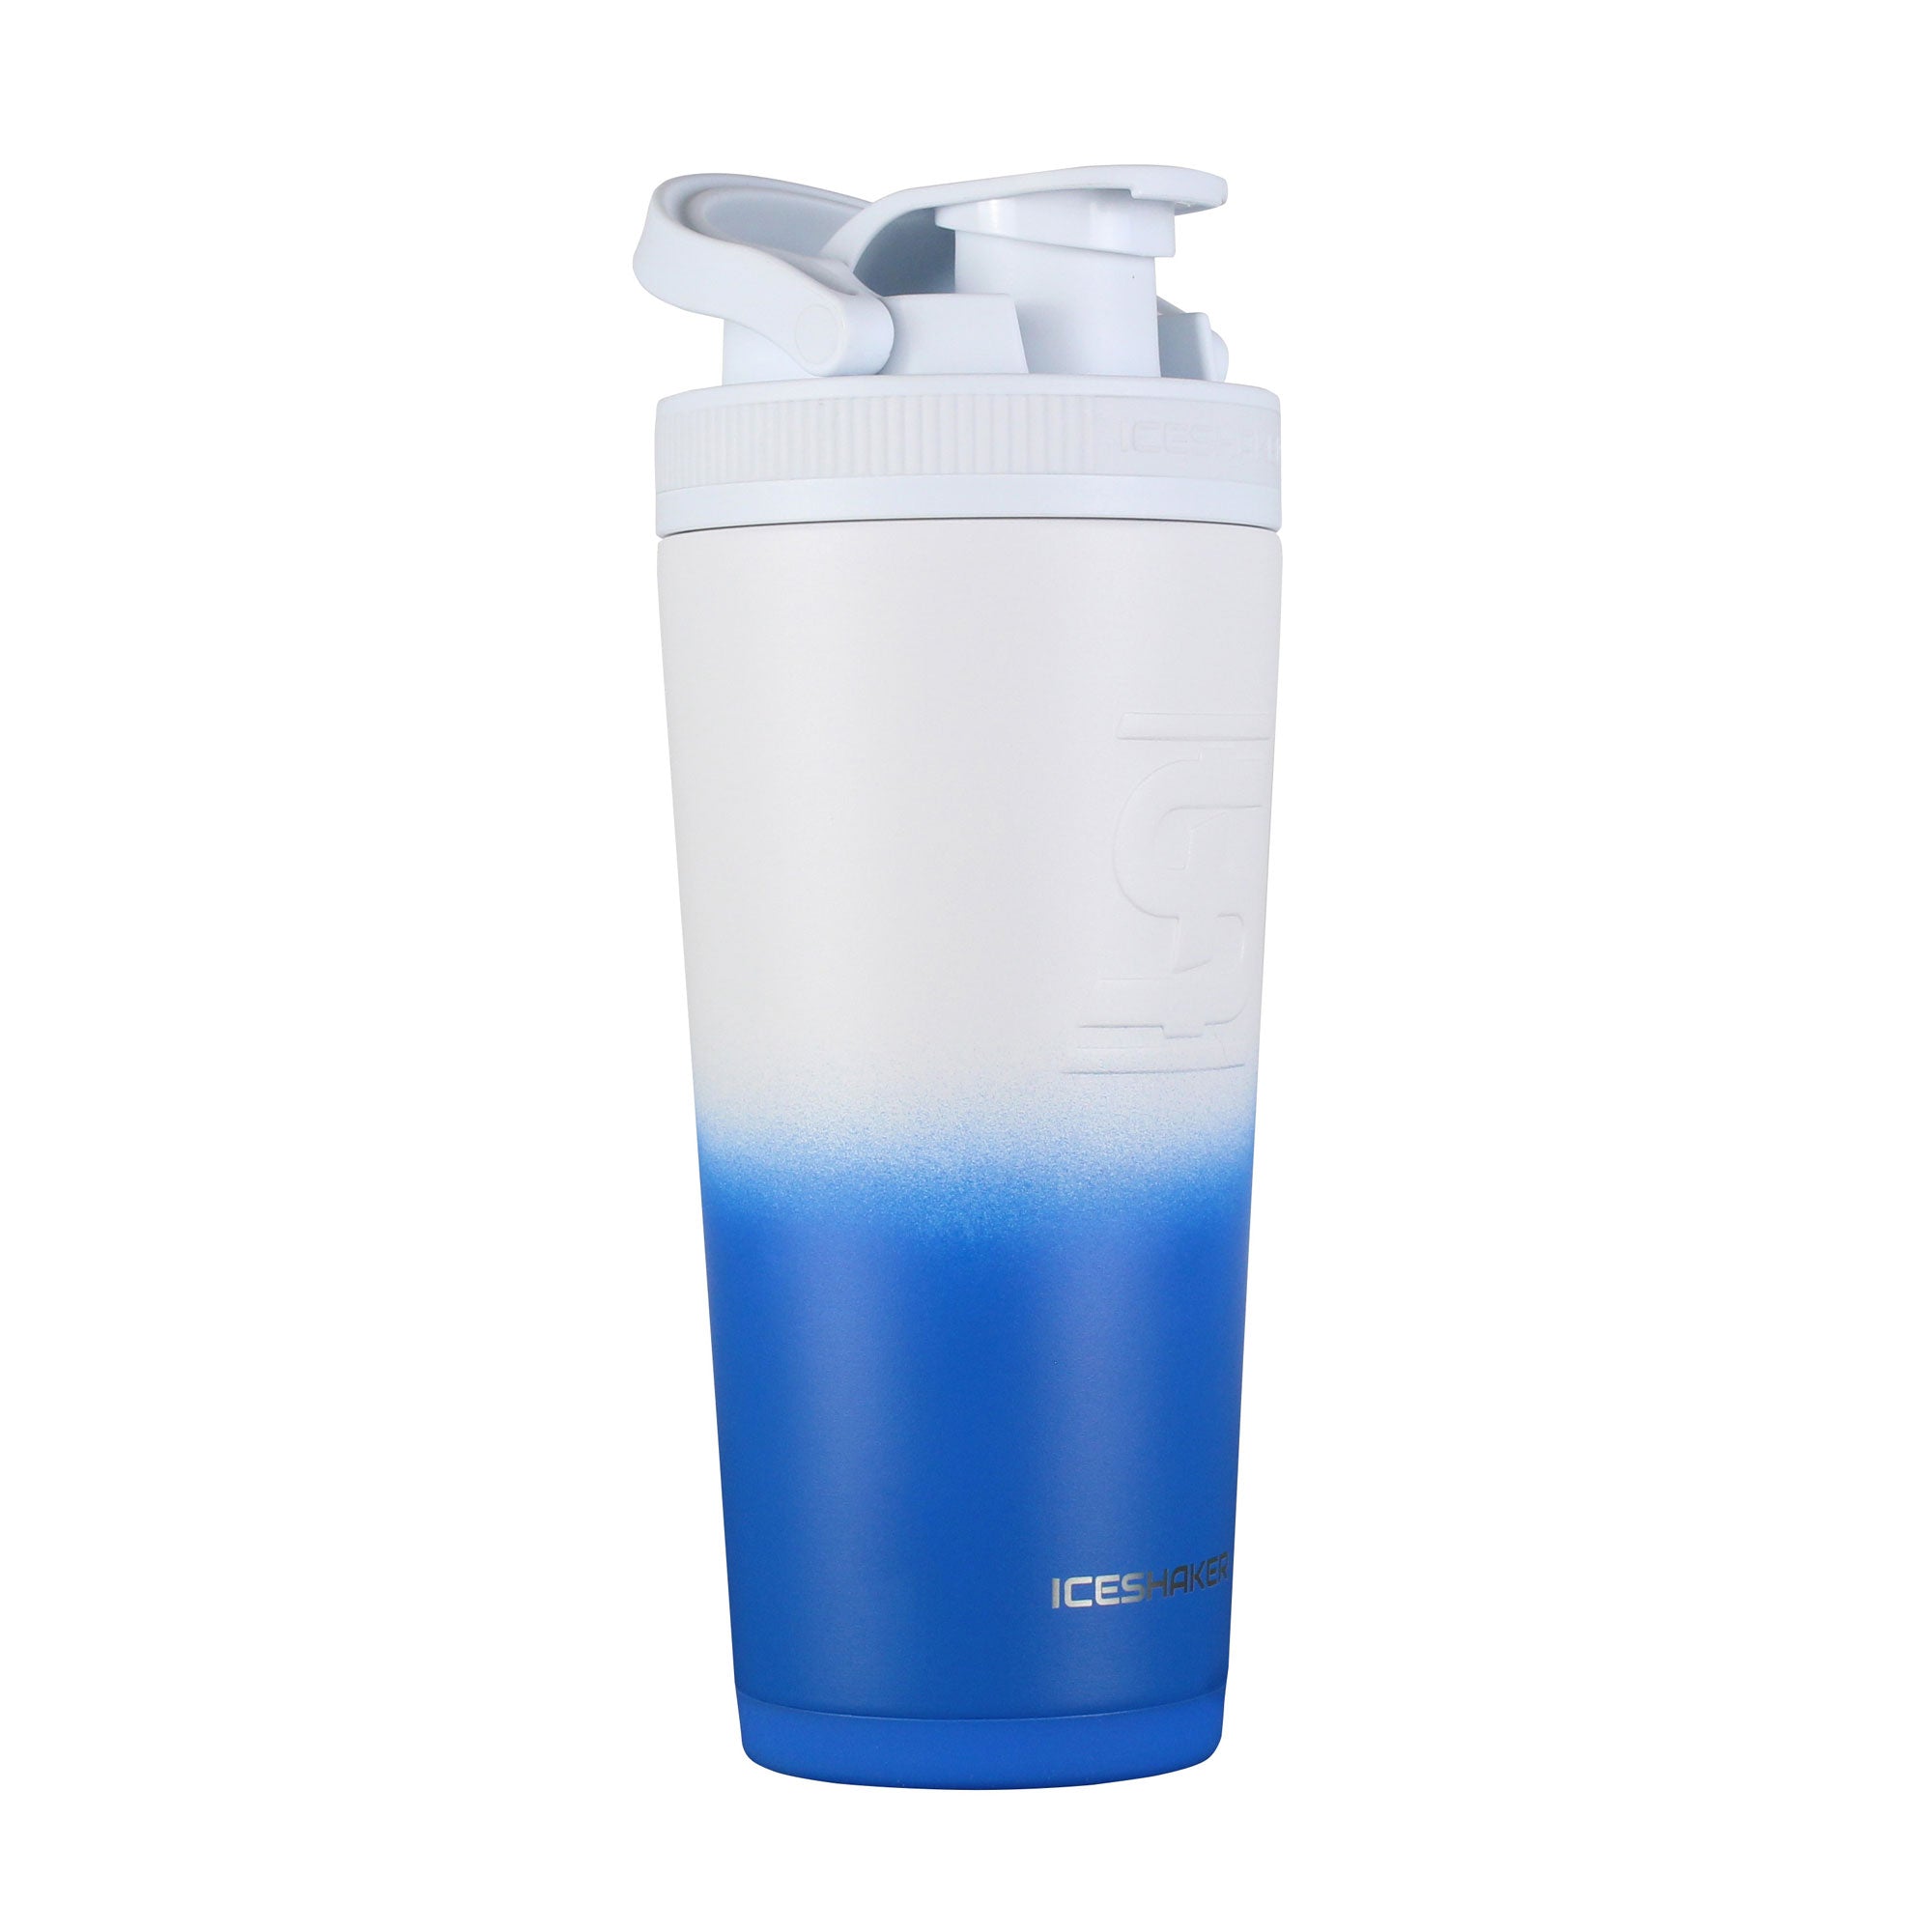 EndurElite Ice Shaker - EndurElite